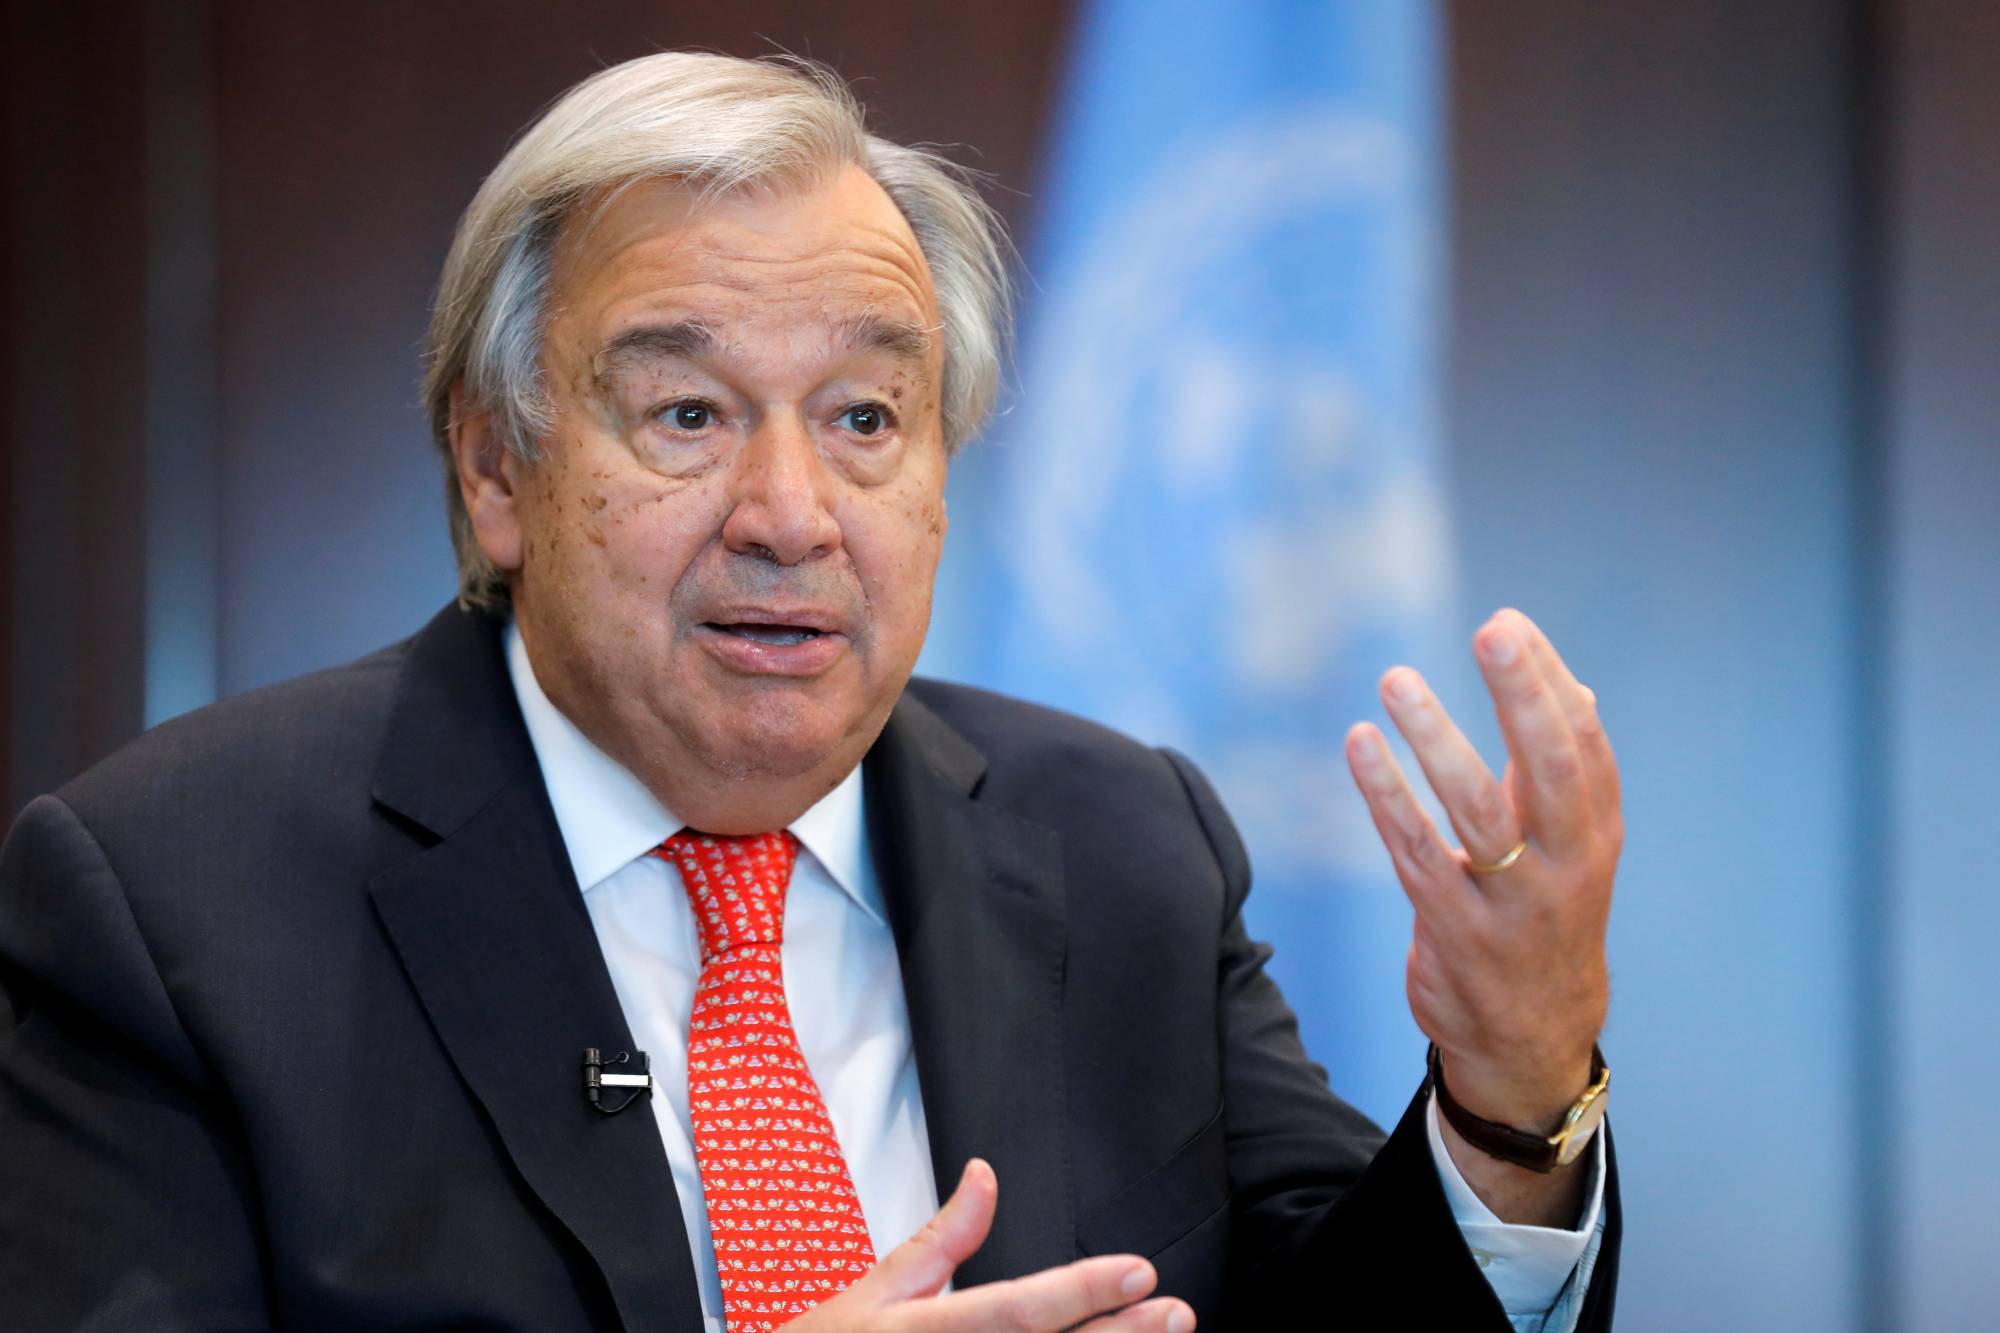 La hora de António Guterres (ONU) Por Boaventura de Sousa Santos (*) | Diario digital Público, España